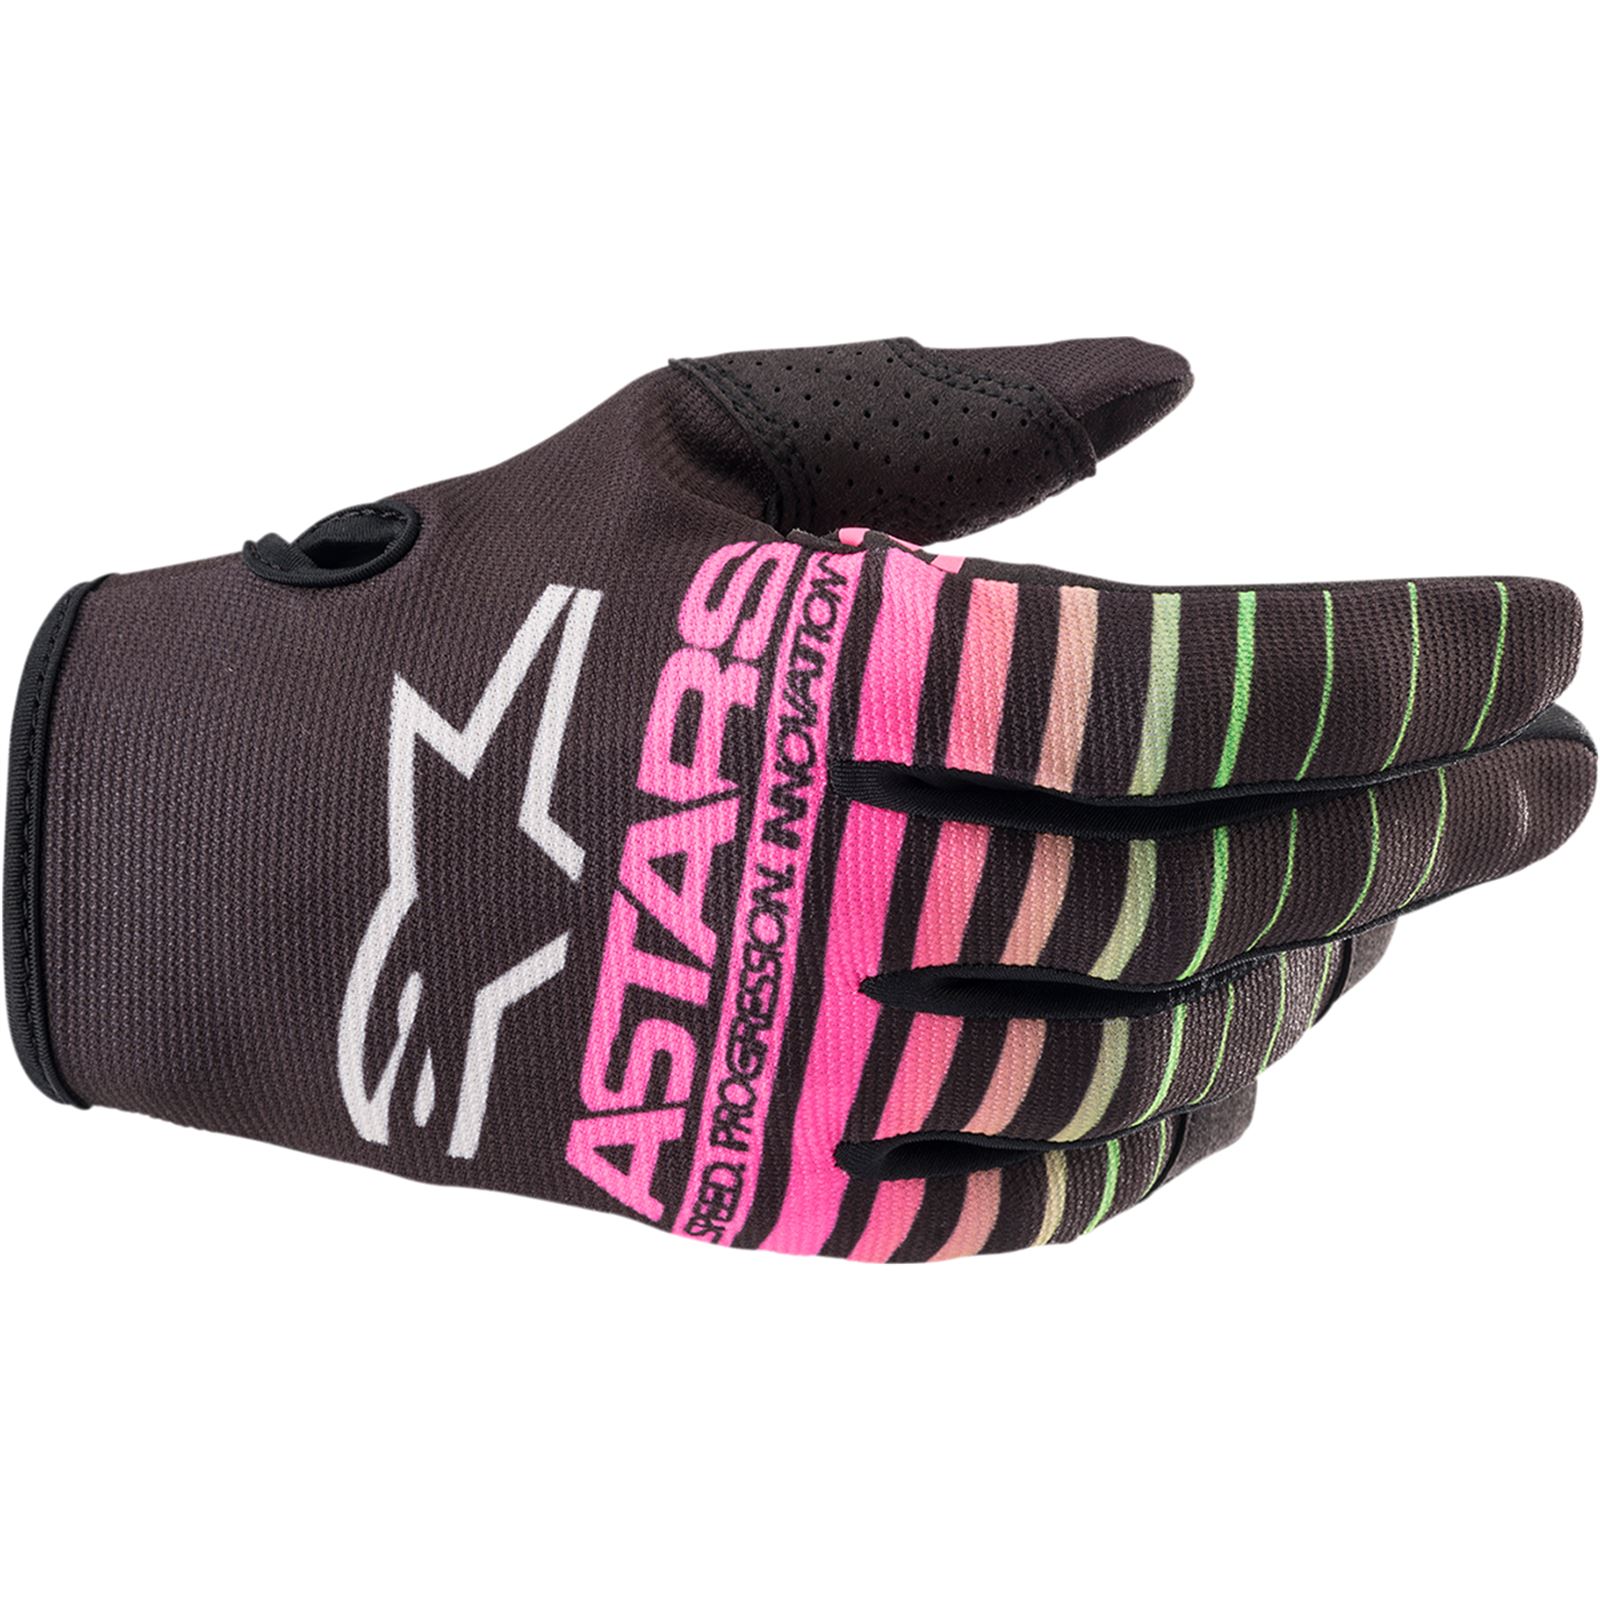 Alpinestars Youth Radar Gloves - Black/Green/Pink - Large